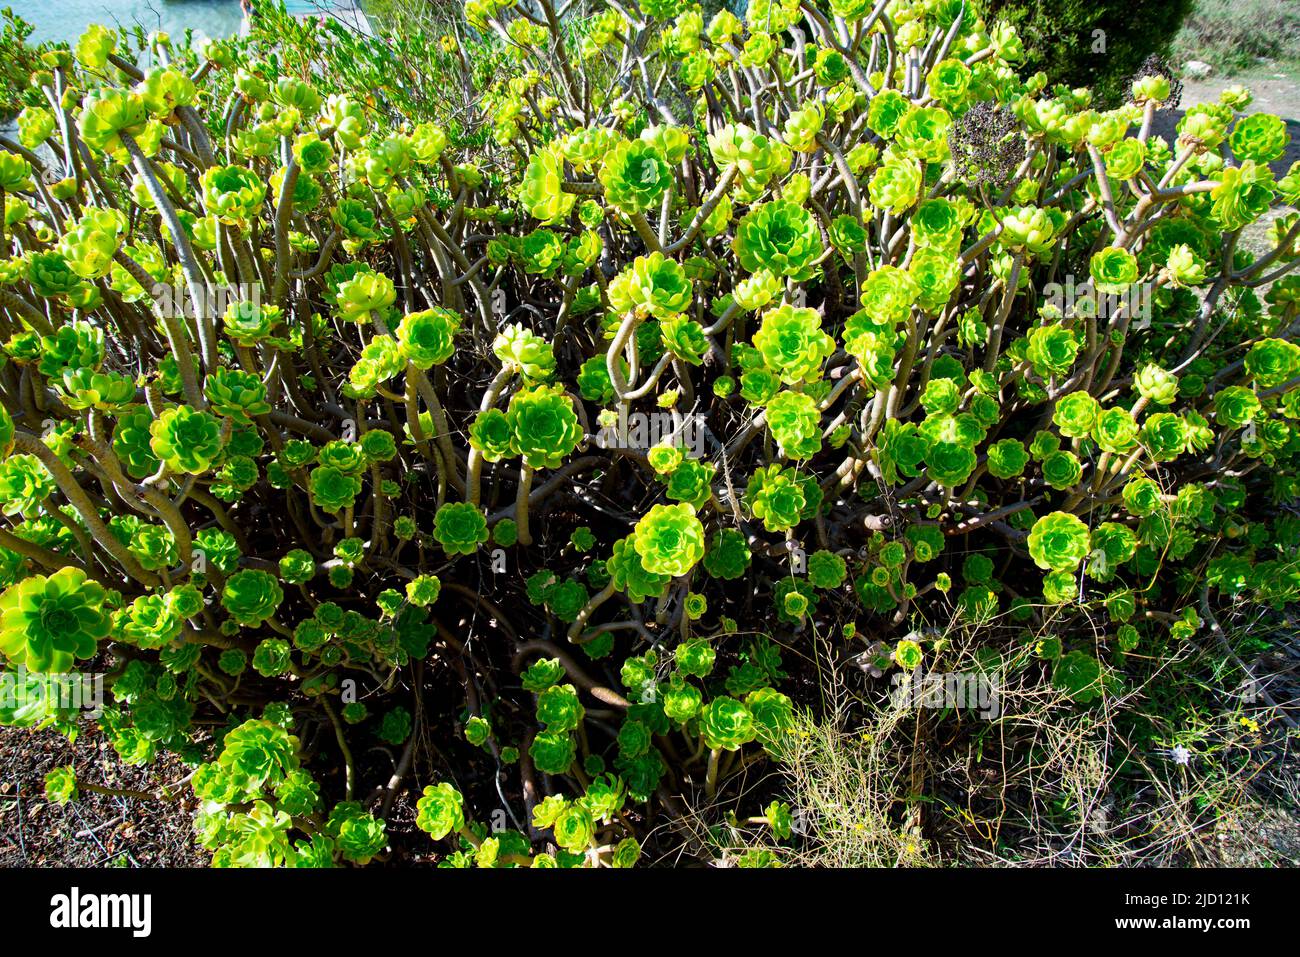 Aeonium Balsamiferum Plant in the Wild Stock Photo